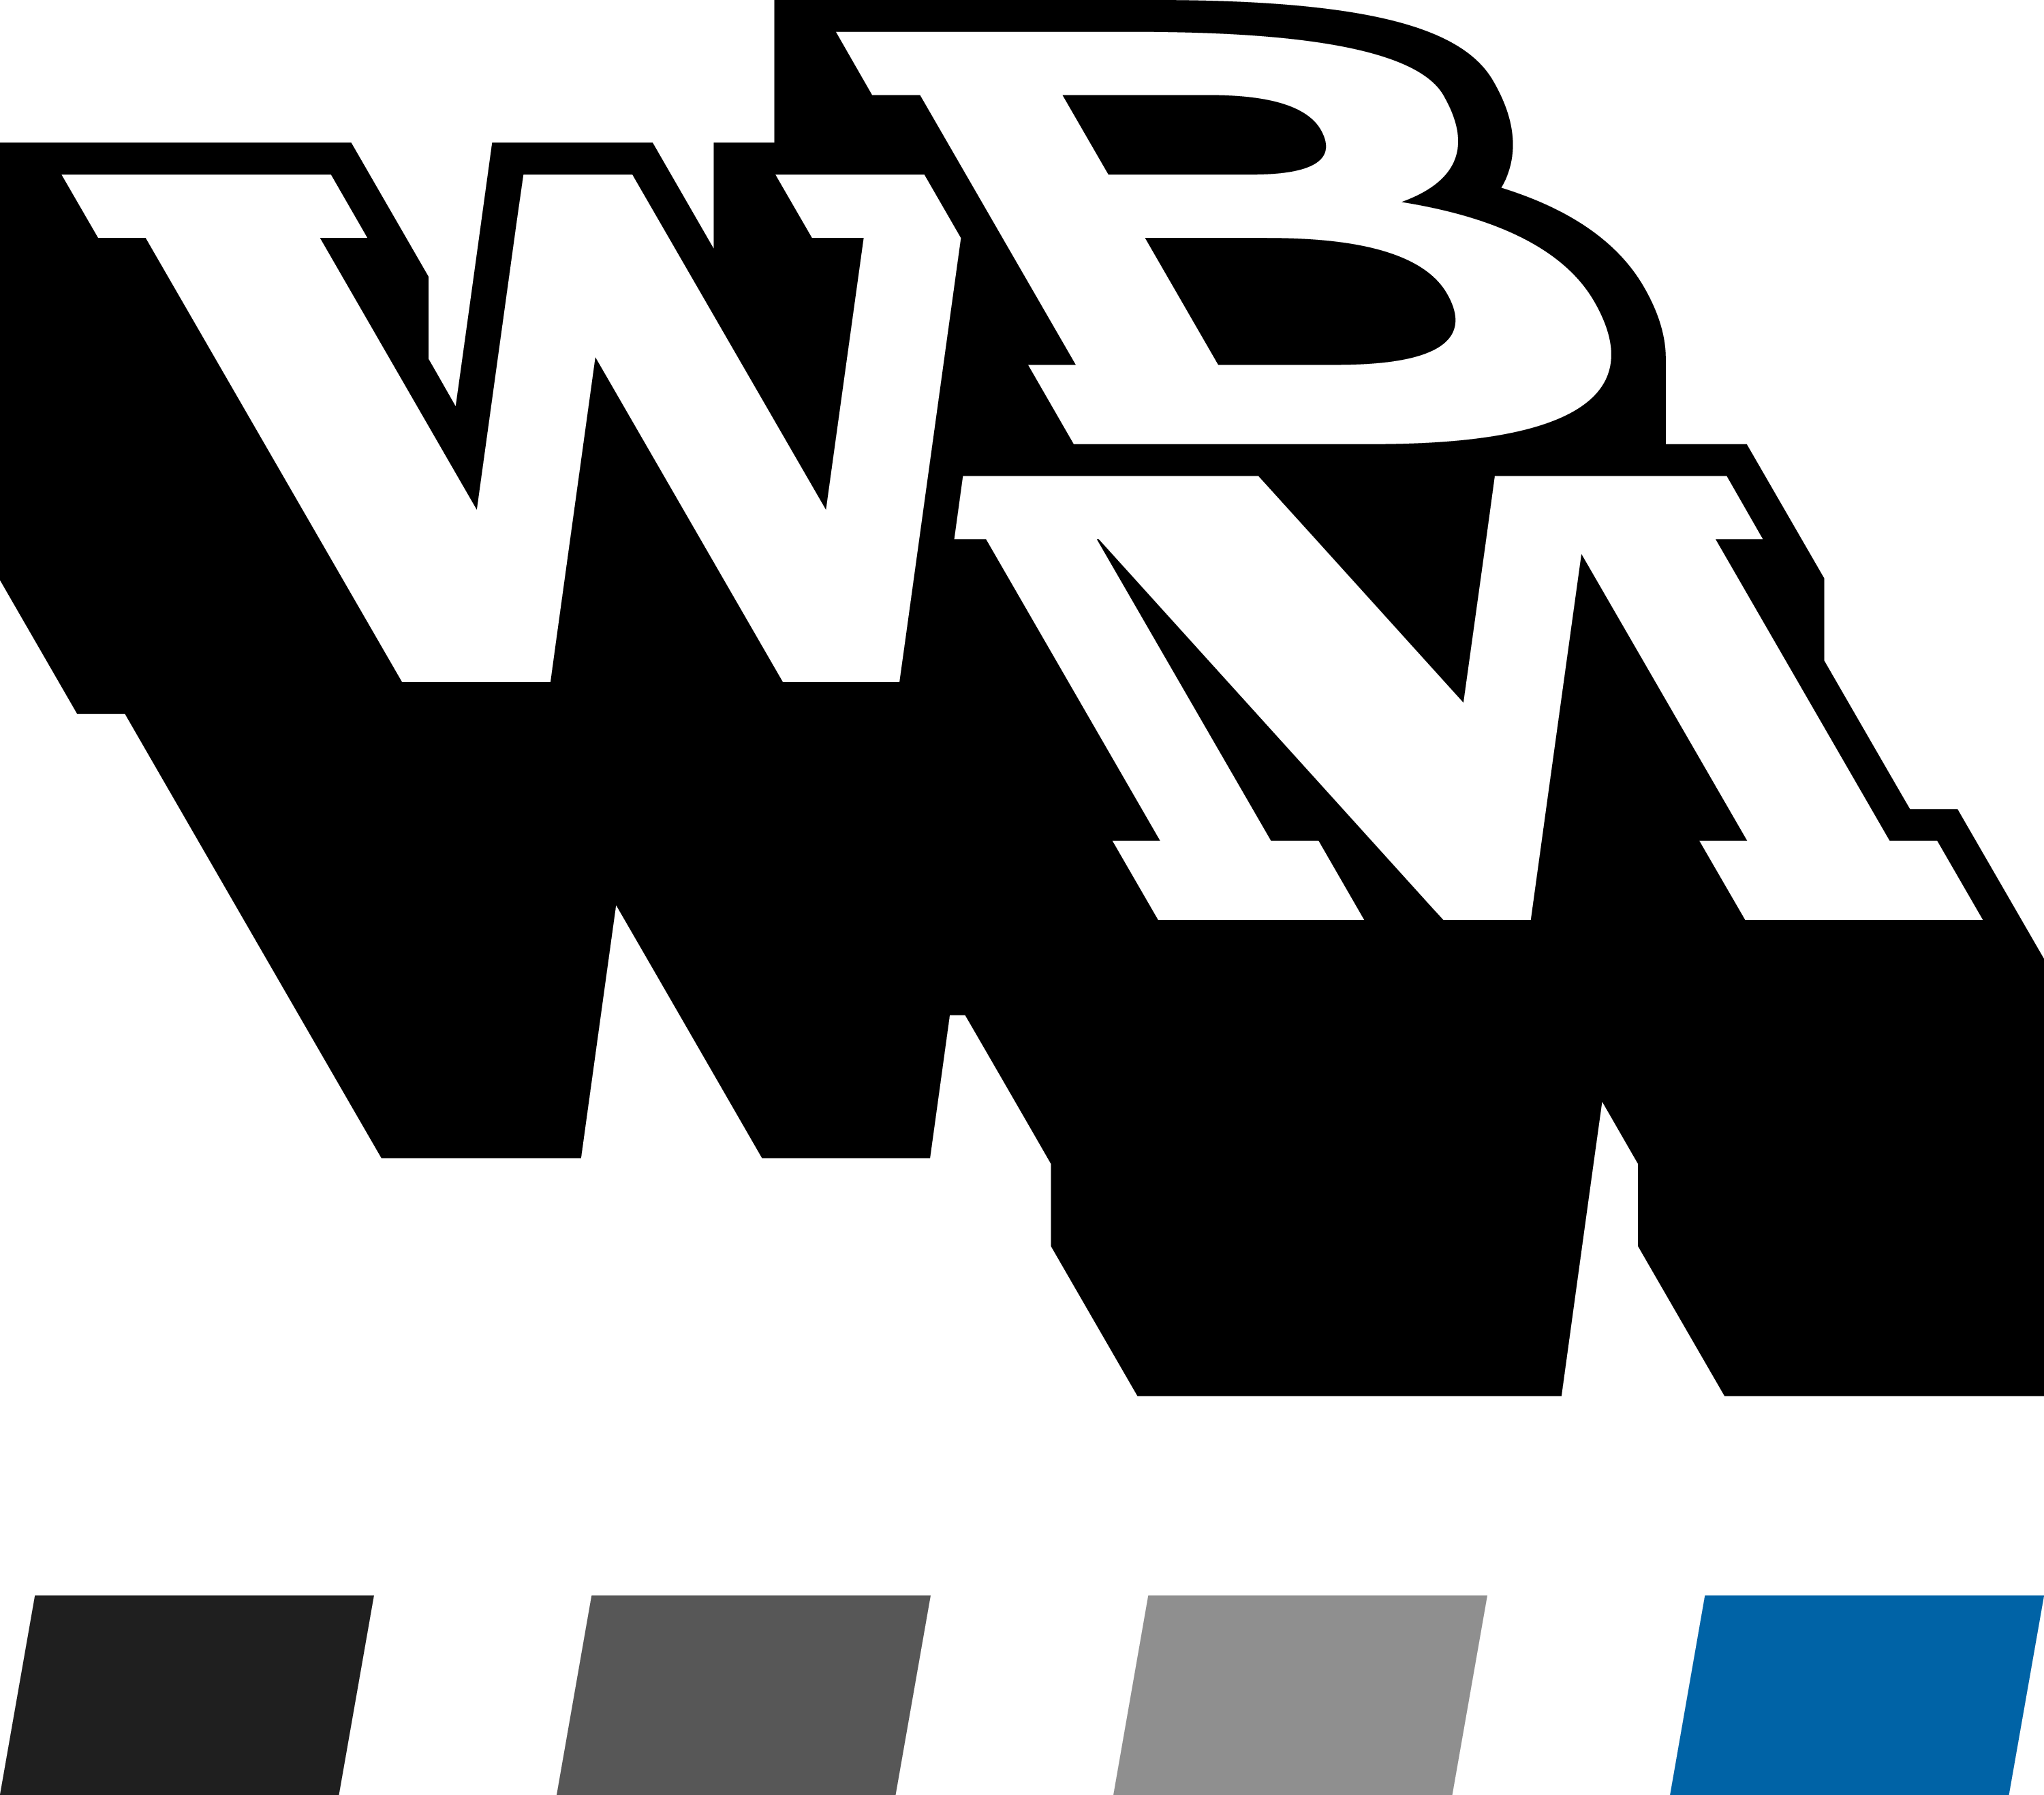 WBM Technologies logo